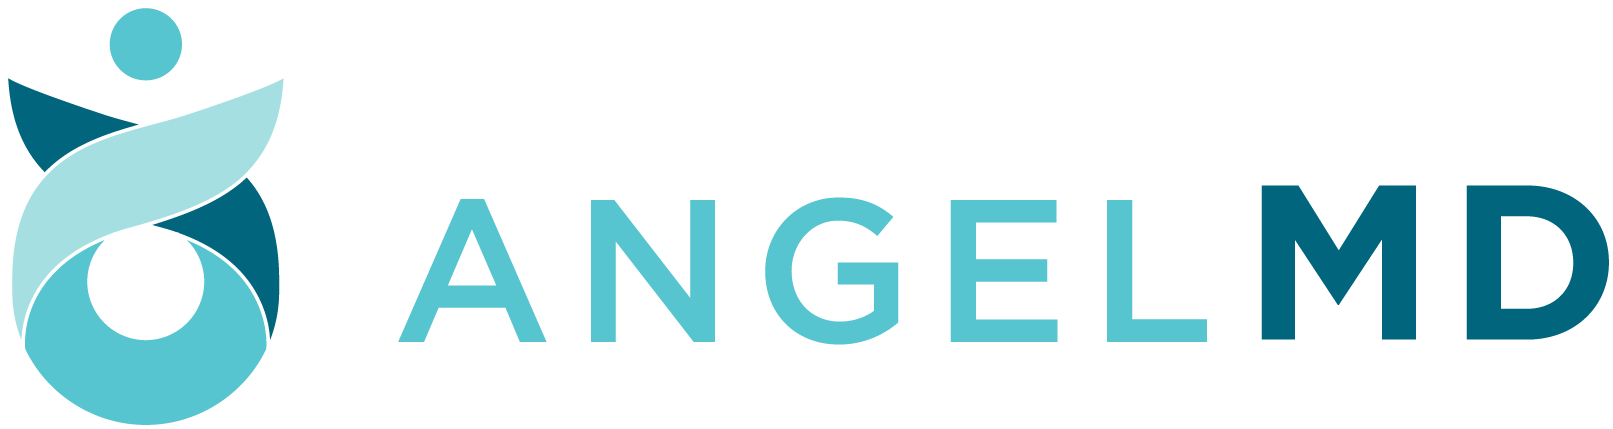 angelMD logo